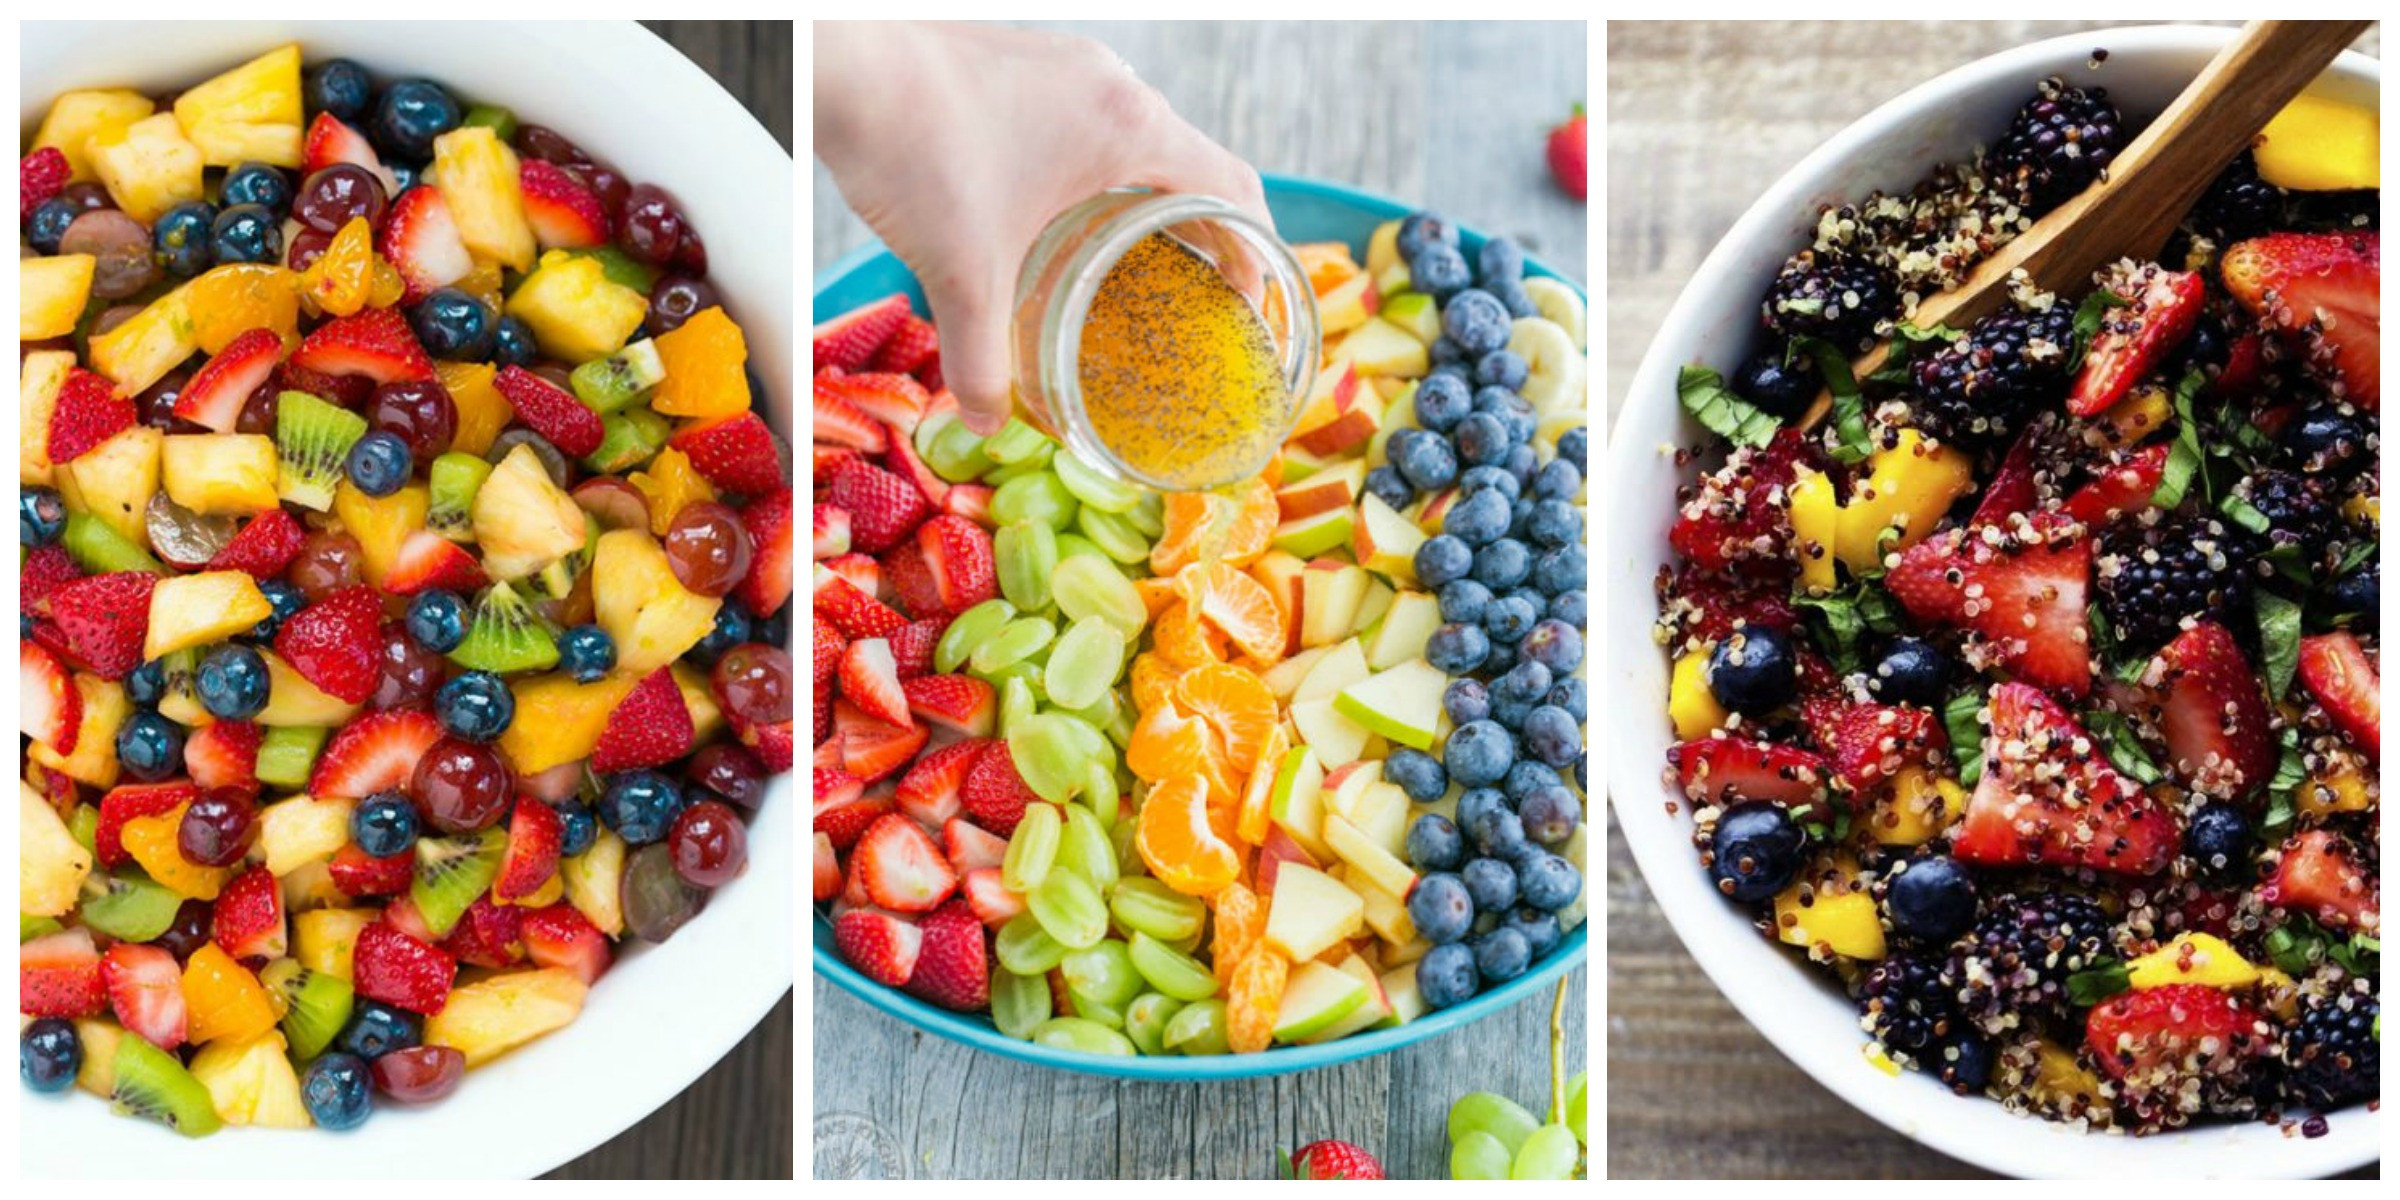 Summer Fruit Salad Ideas
 10 Fresh Fruit Salad Recipes Easy Ideas for Summer Fruit